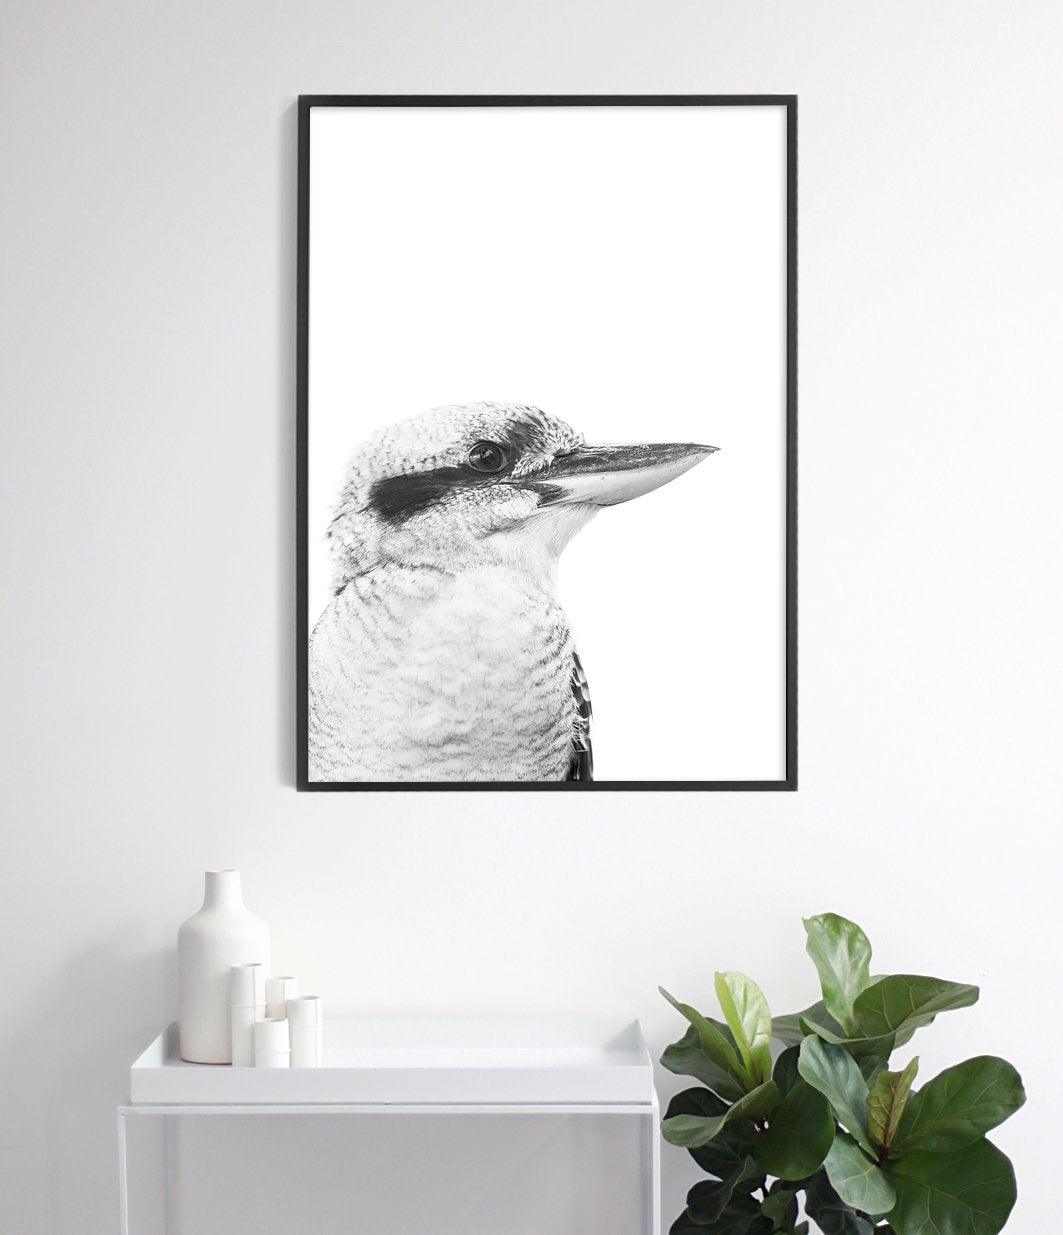 kookaburra print